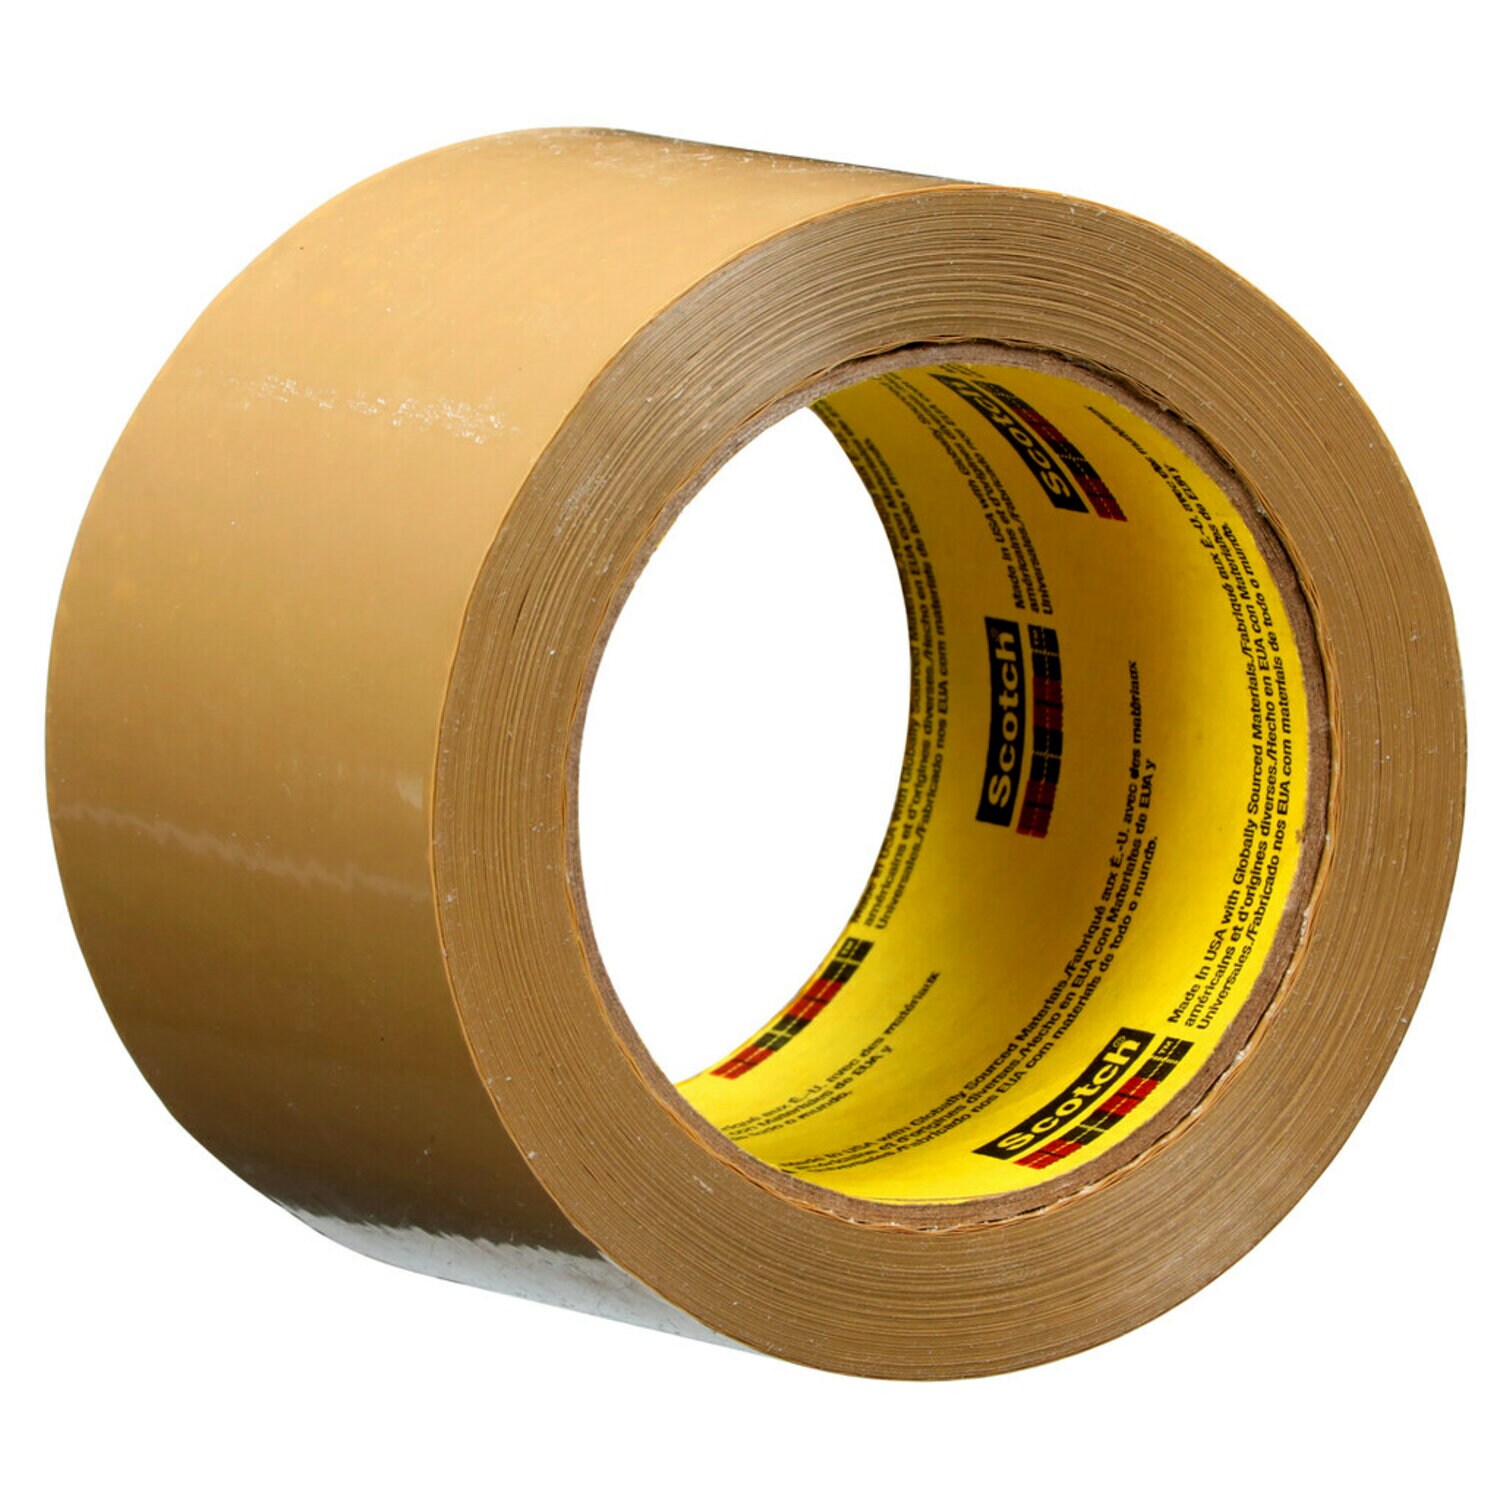 7100279675 - Scotch Box Sealing Tape 375+ High Tack, Tan, 72 mm x 50 m, 24 Roll/Case